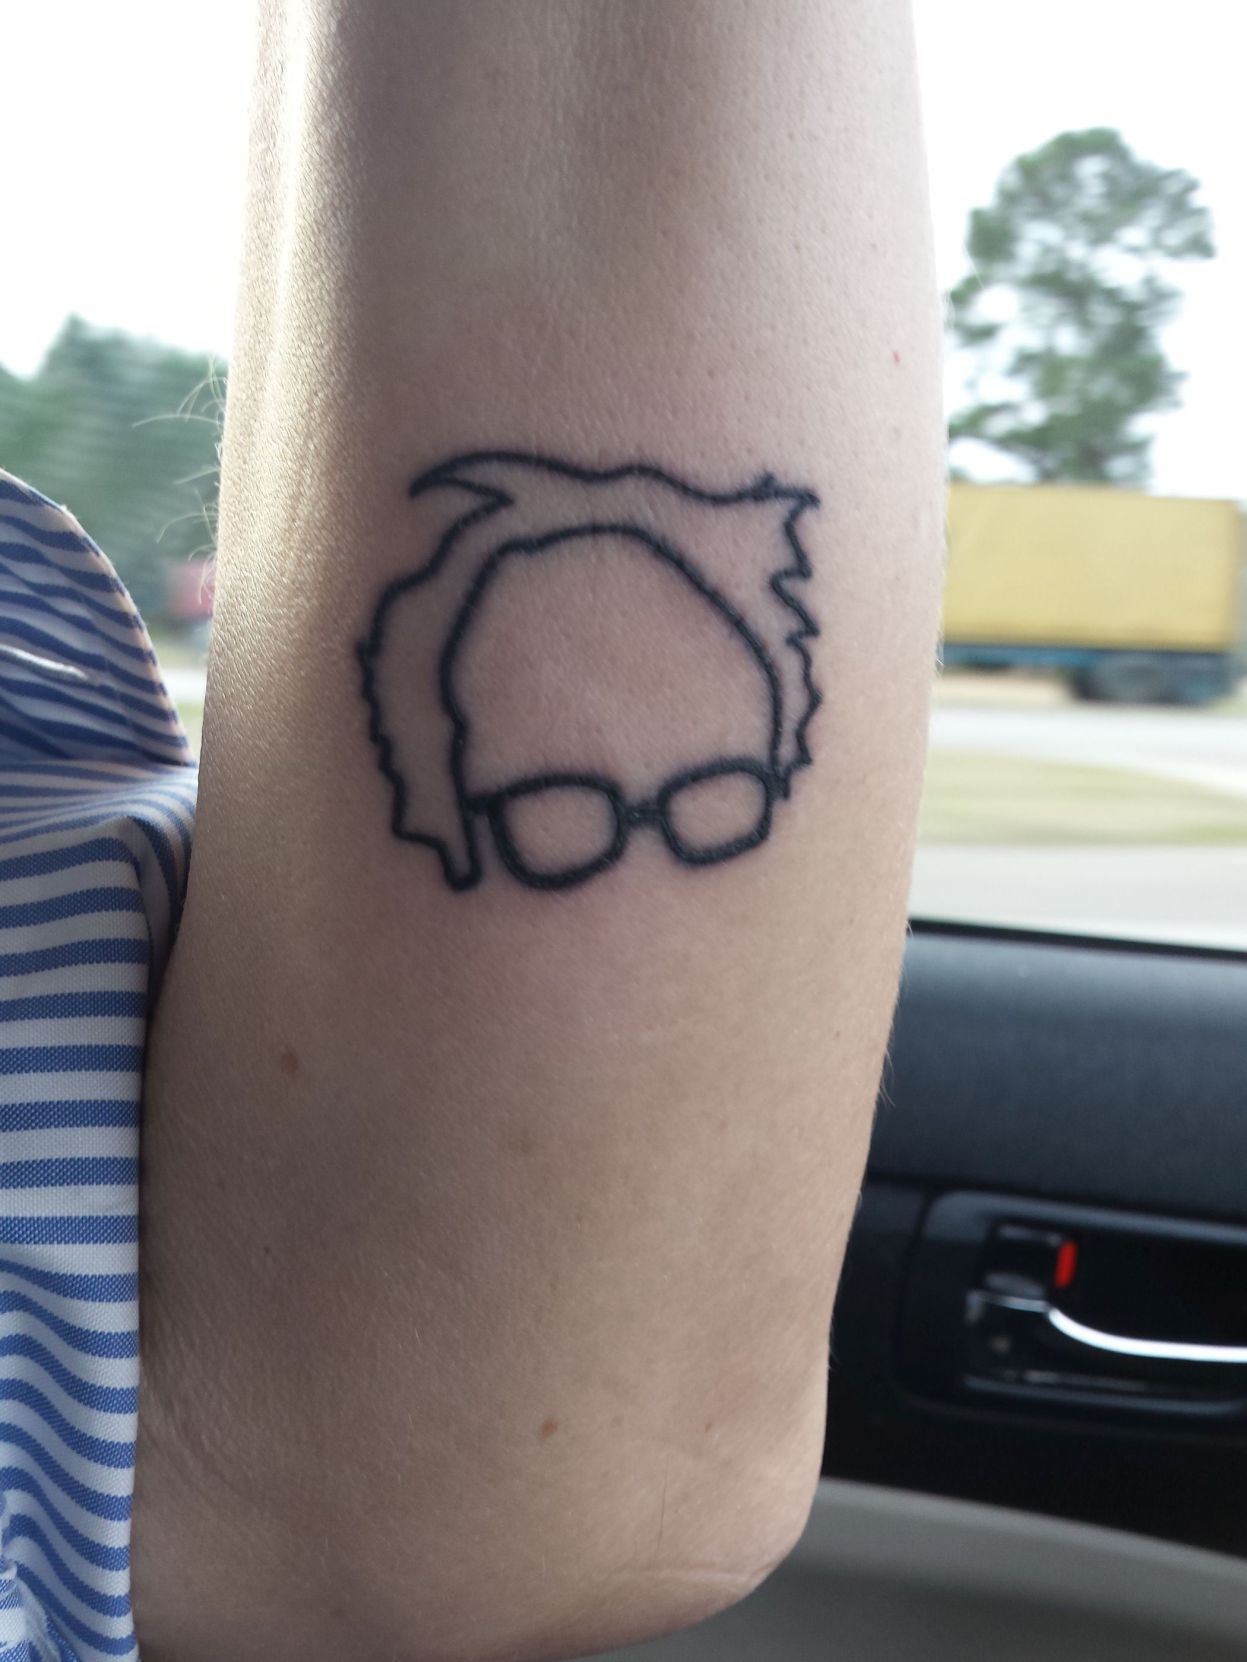 Really feeling the Bern: Democrat candidate gets Bernie Sanders tattoo